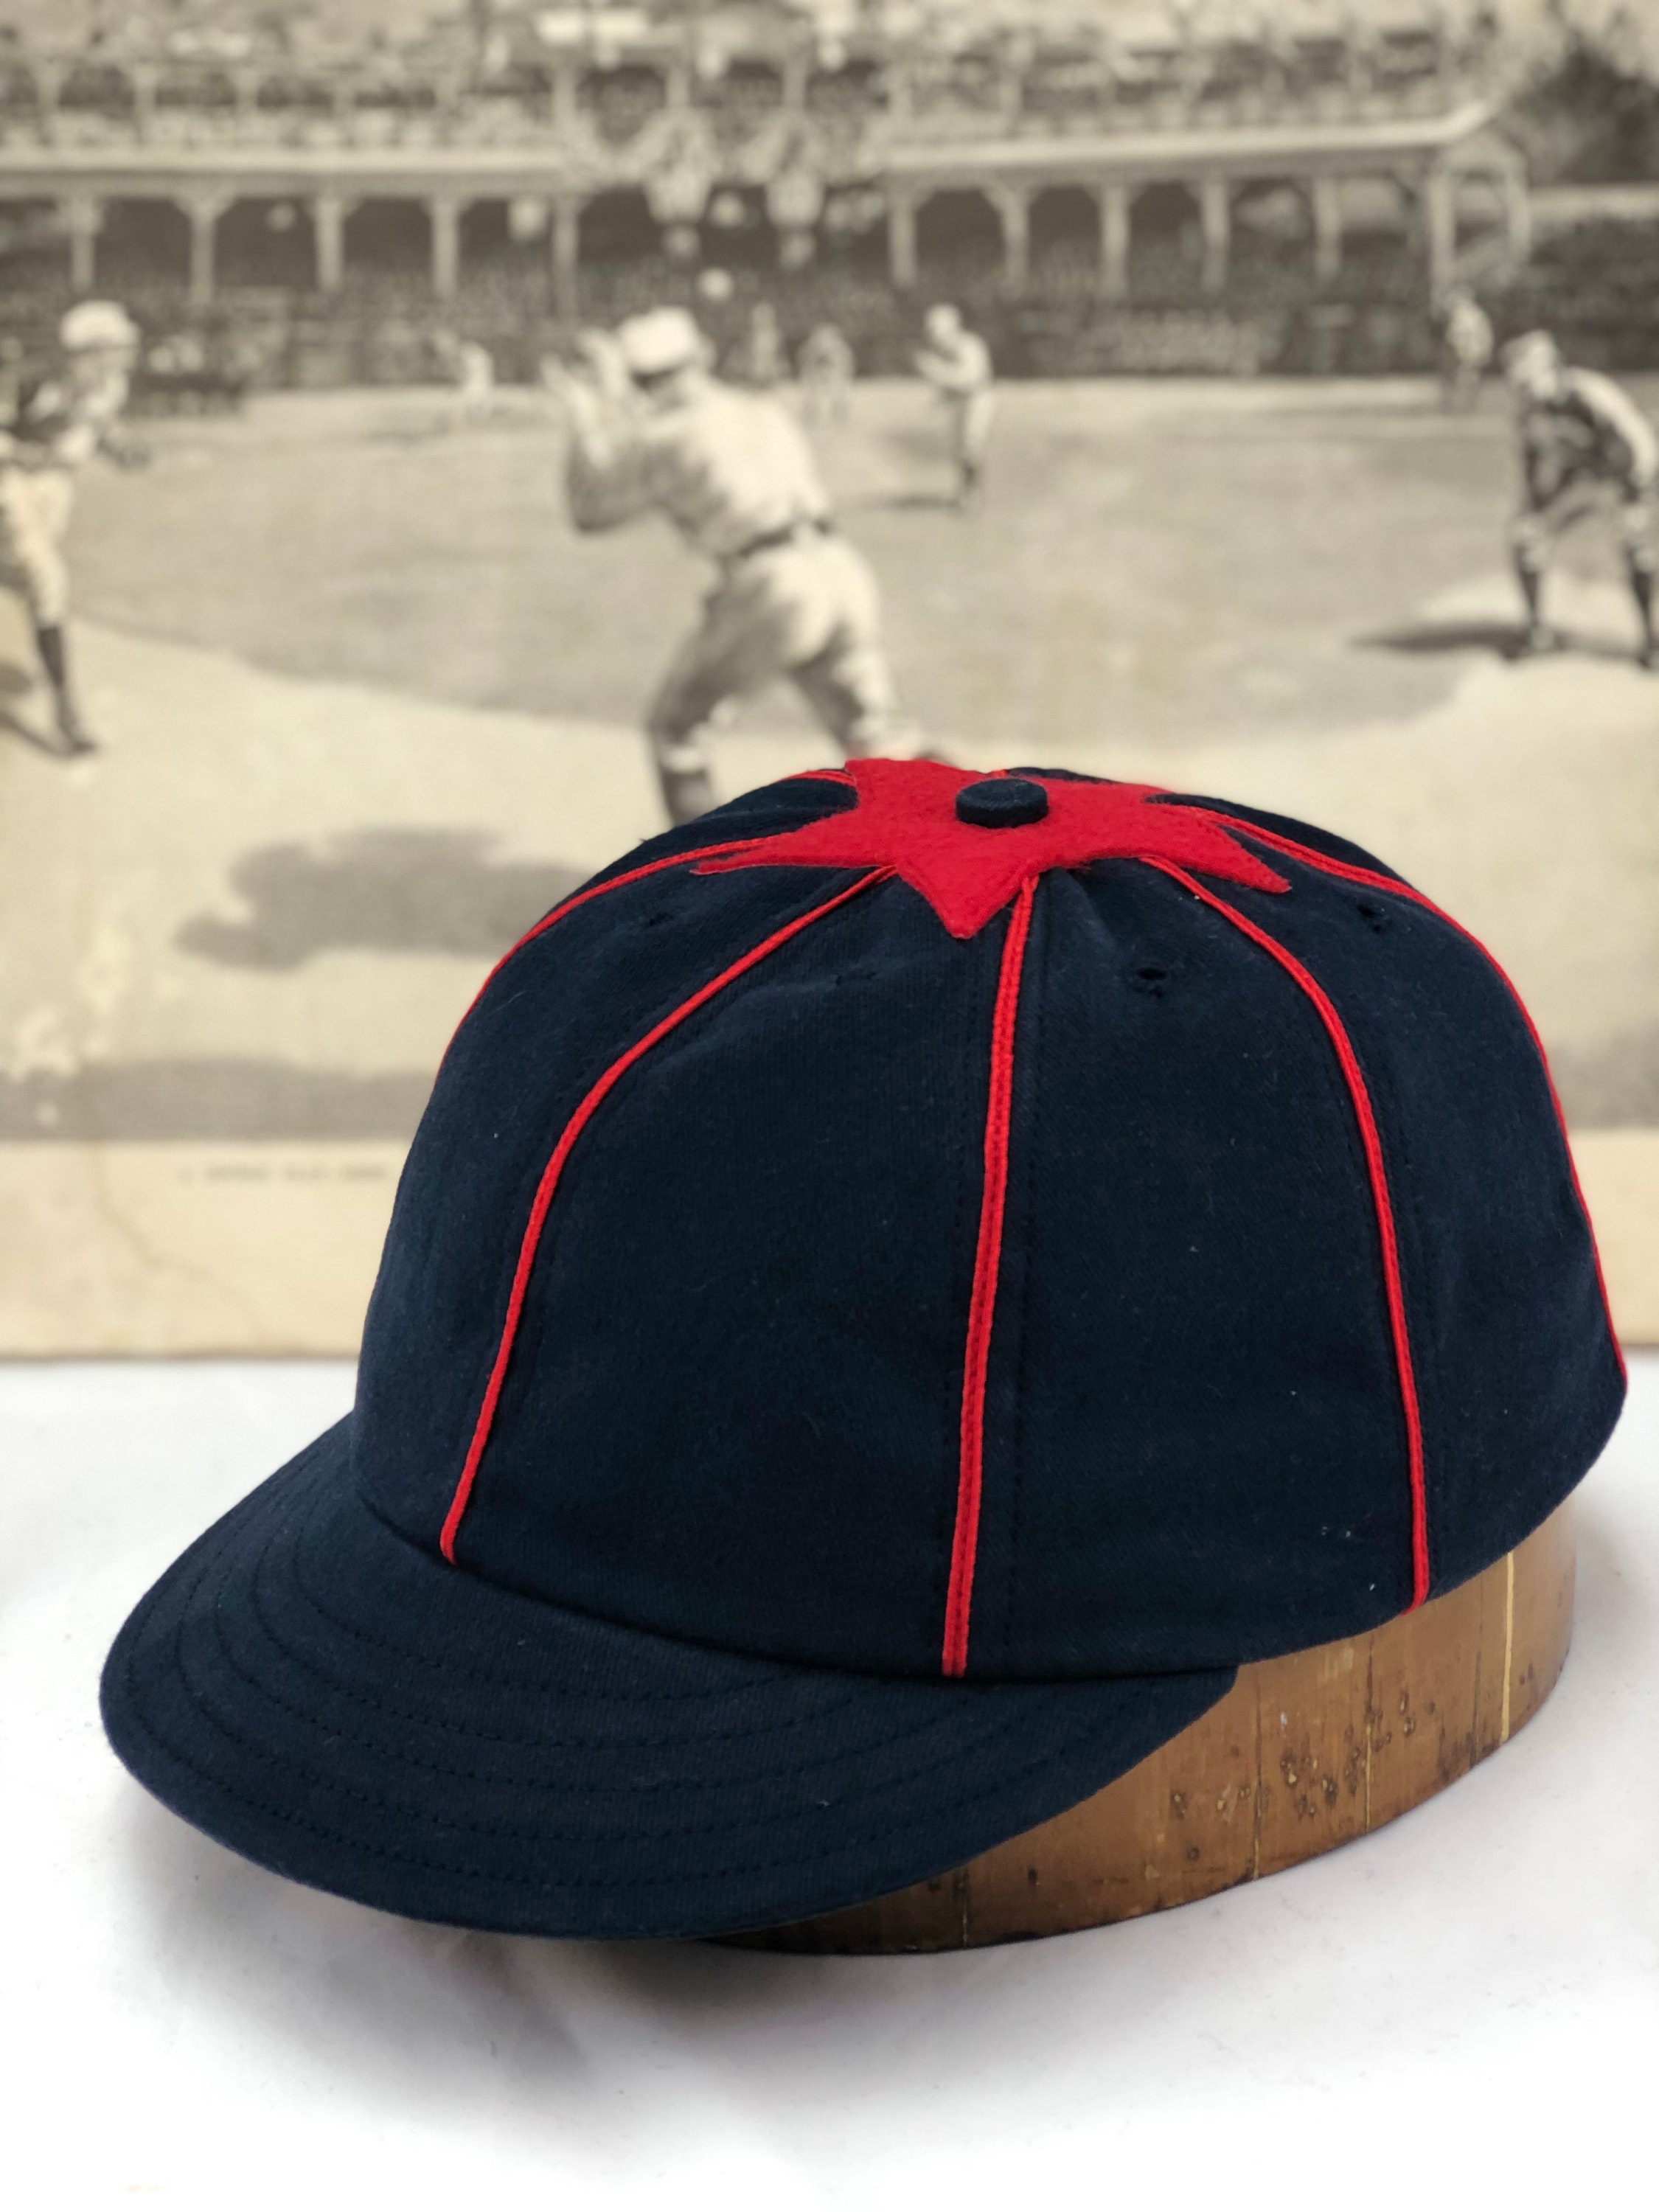 Rough and Readys of Stockbridge Vintage Baseball Team Cap. - Etsy